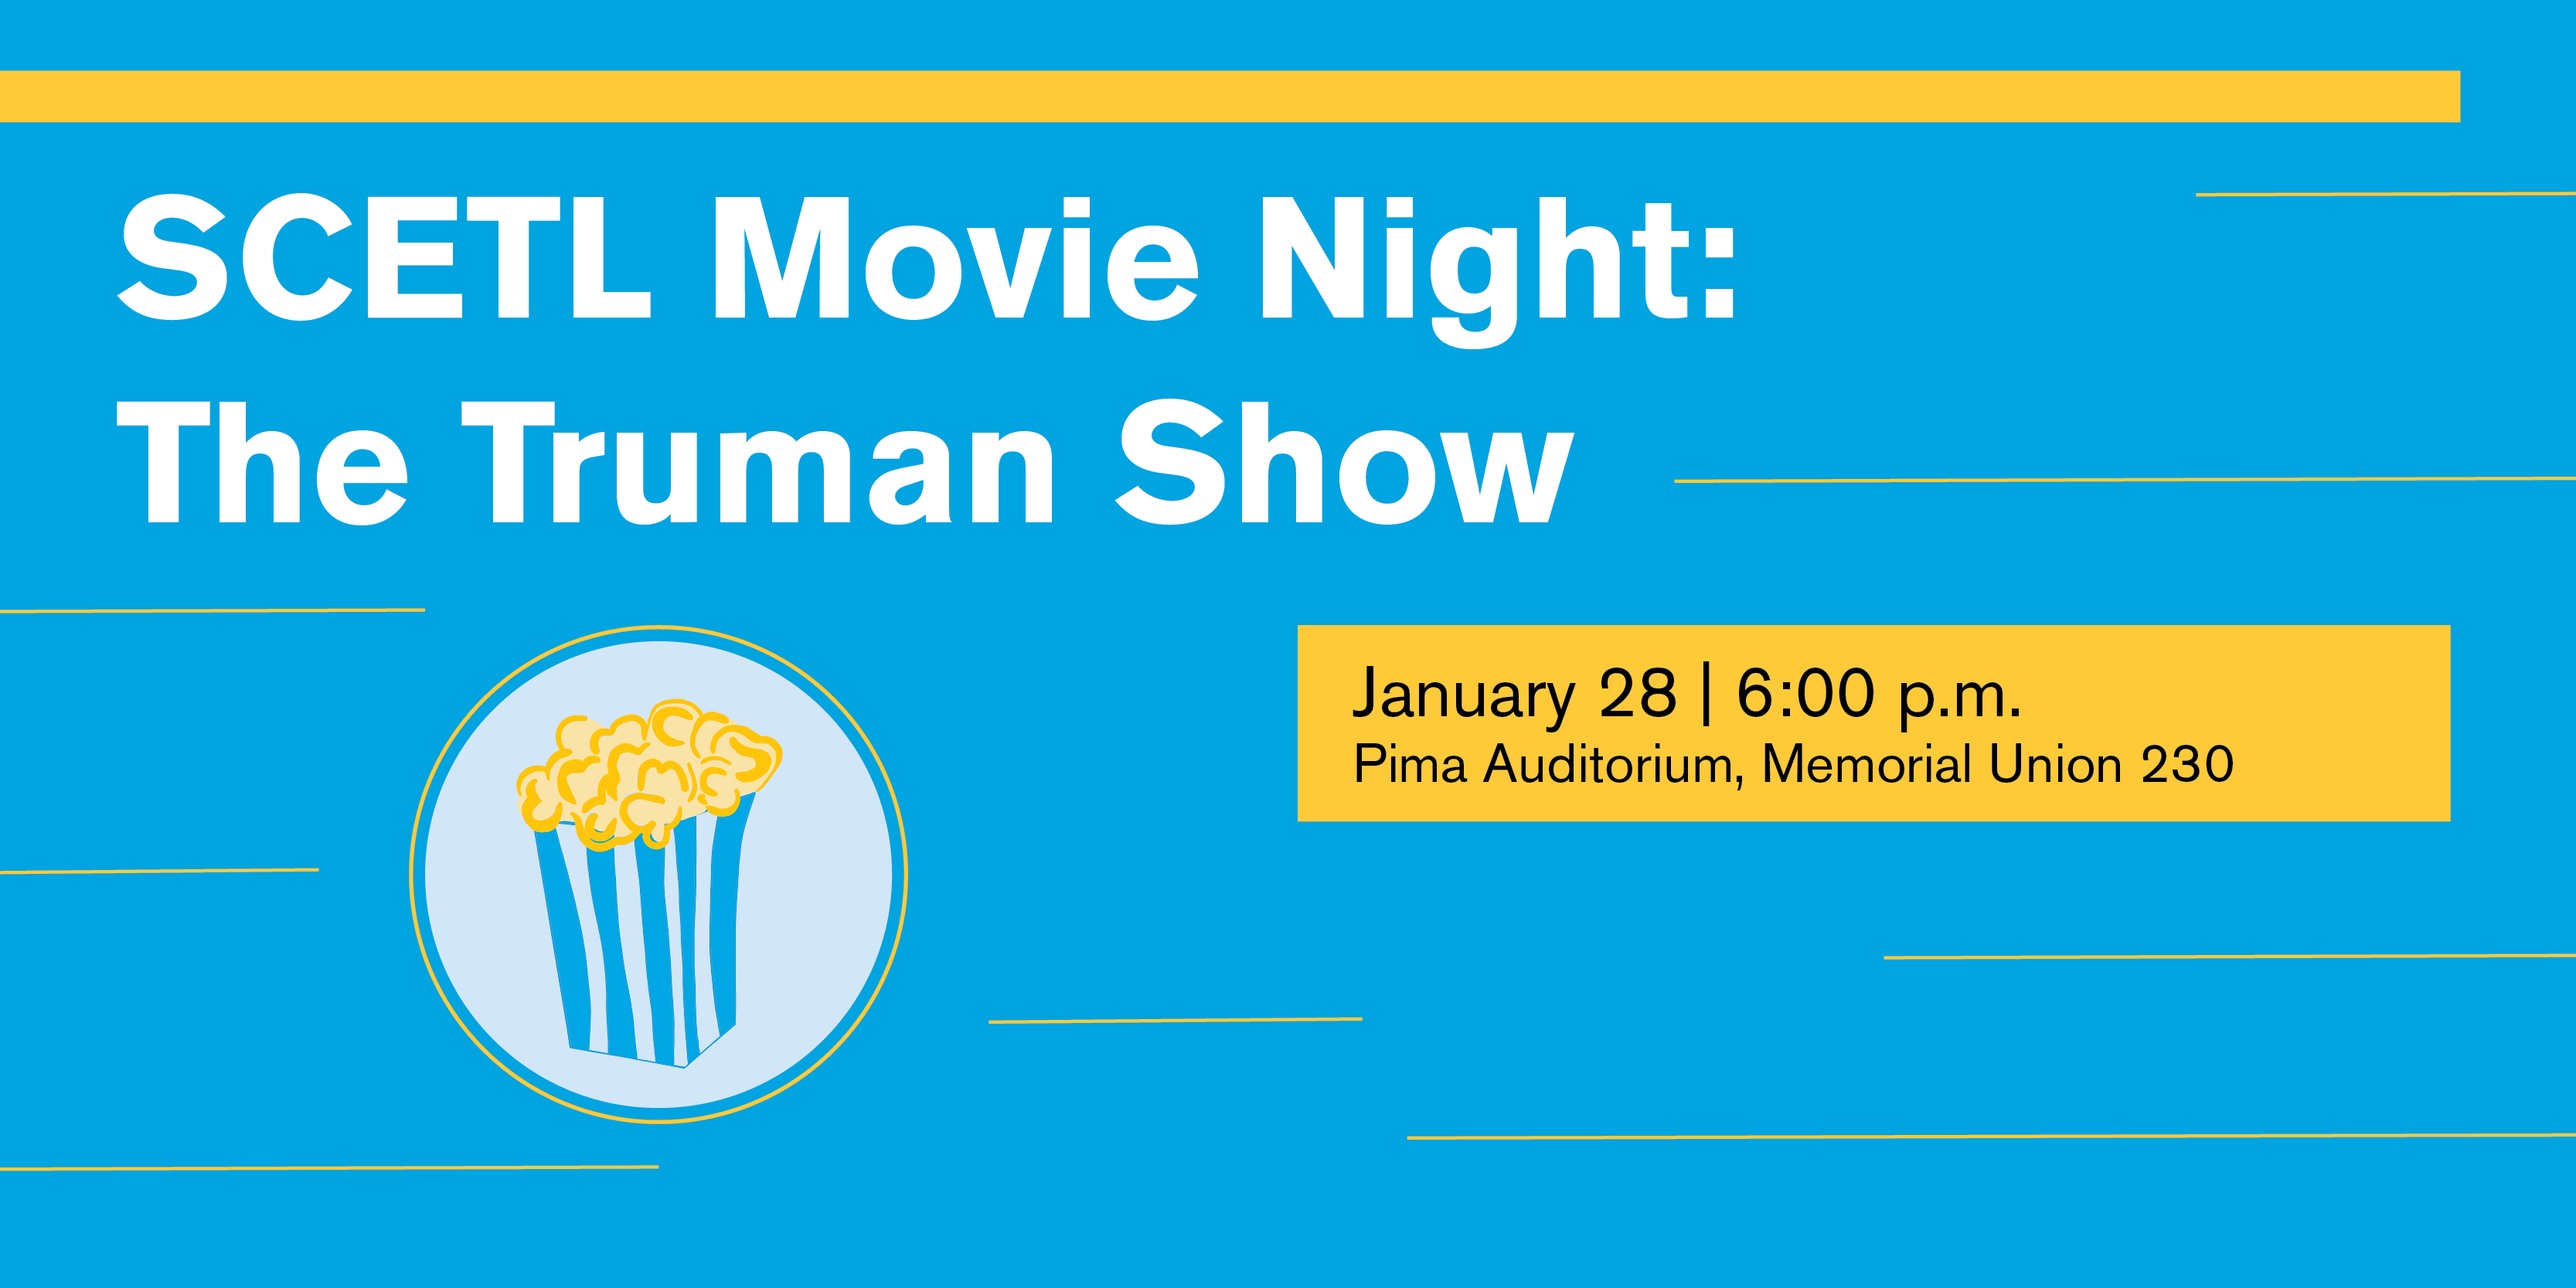 SCETL Annual Movie Night January 28, 2022 